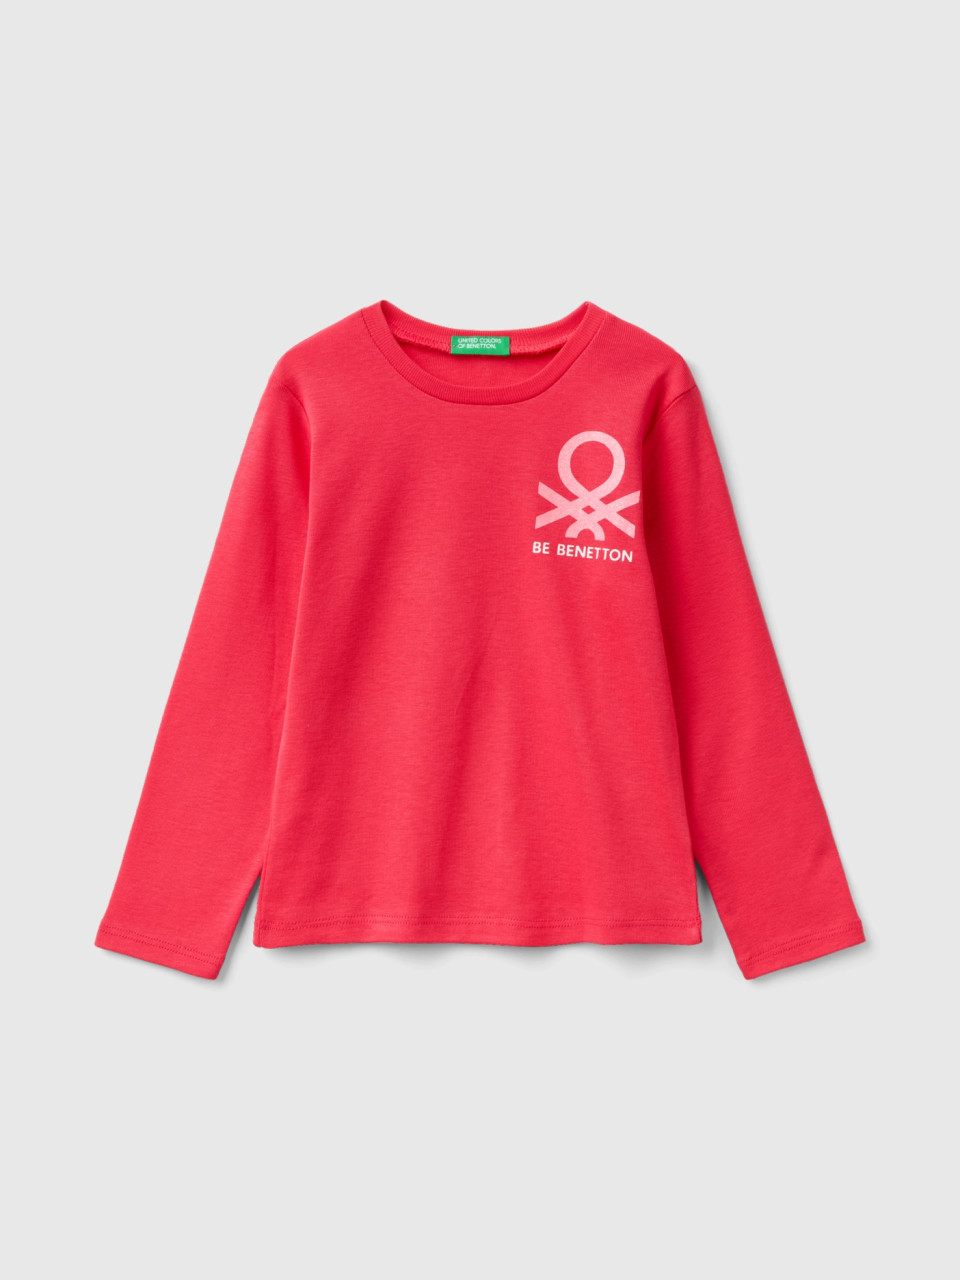 Benetton, Camiseta De Manga Larga Con Estampado De Glitter, Fucsia, Niños